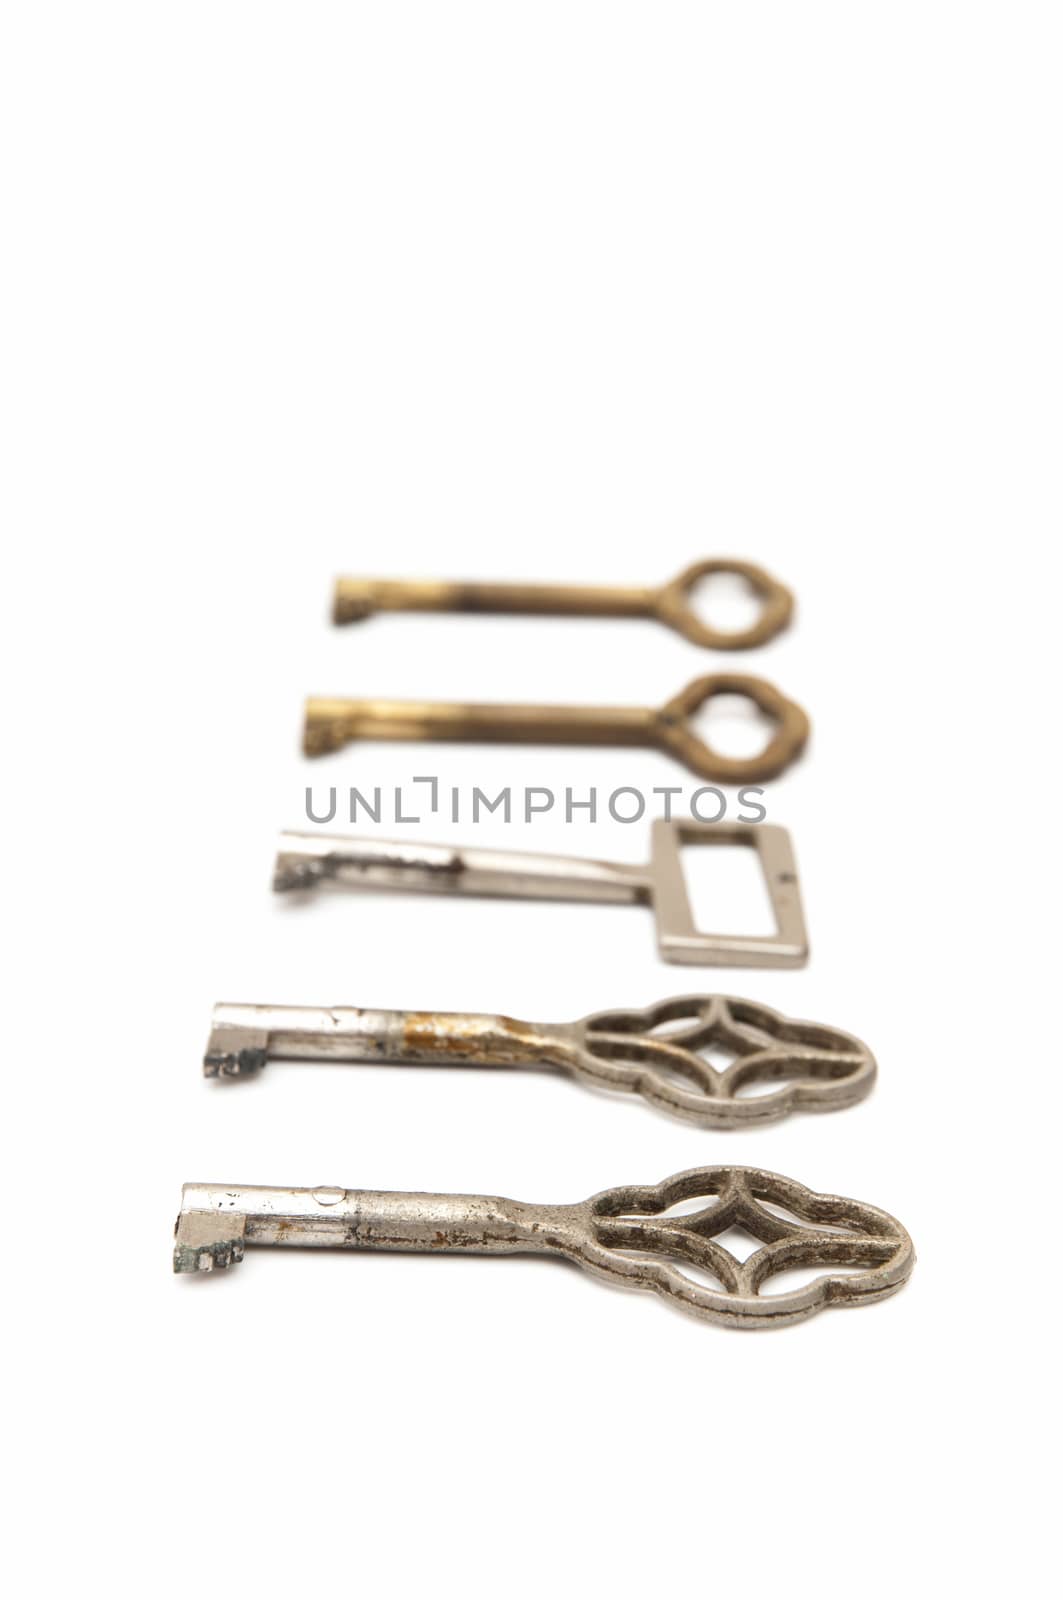 old keys on a white background